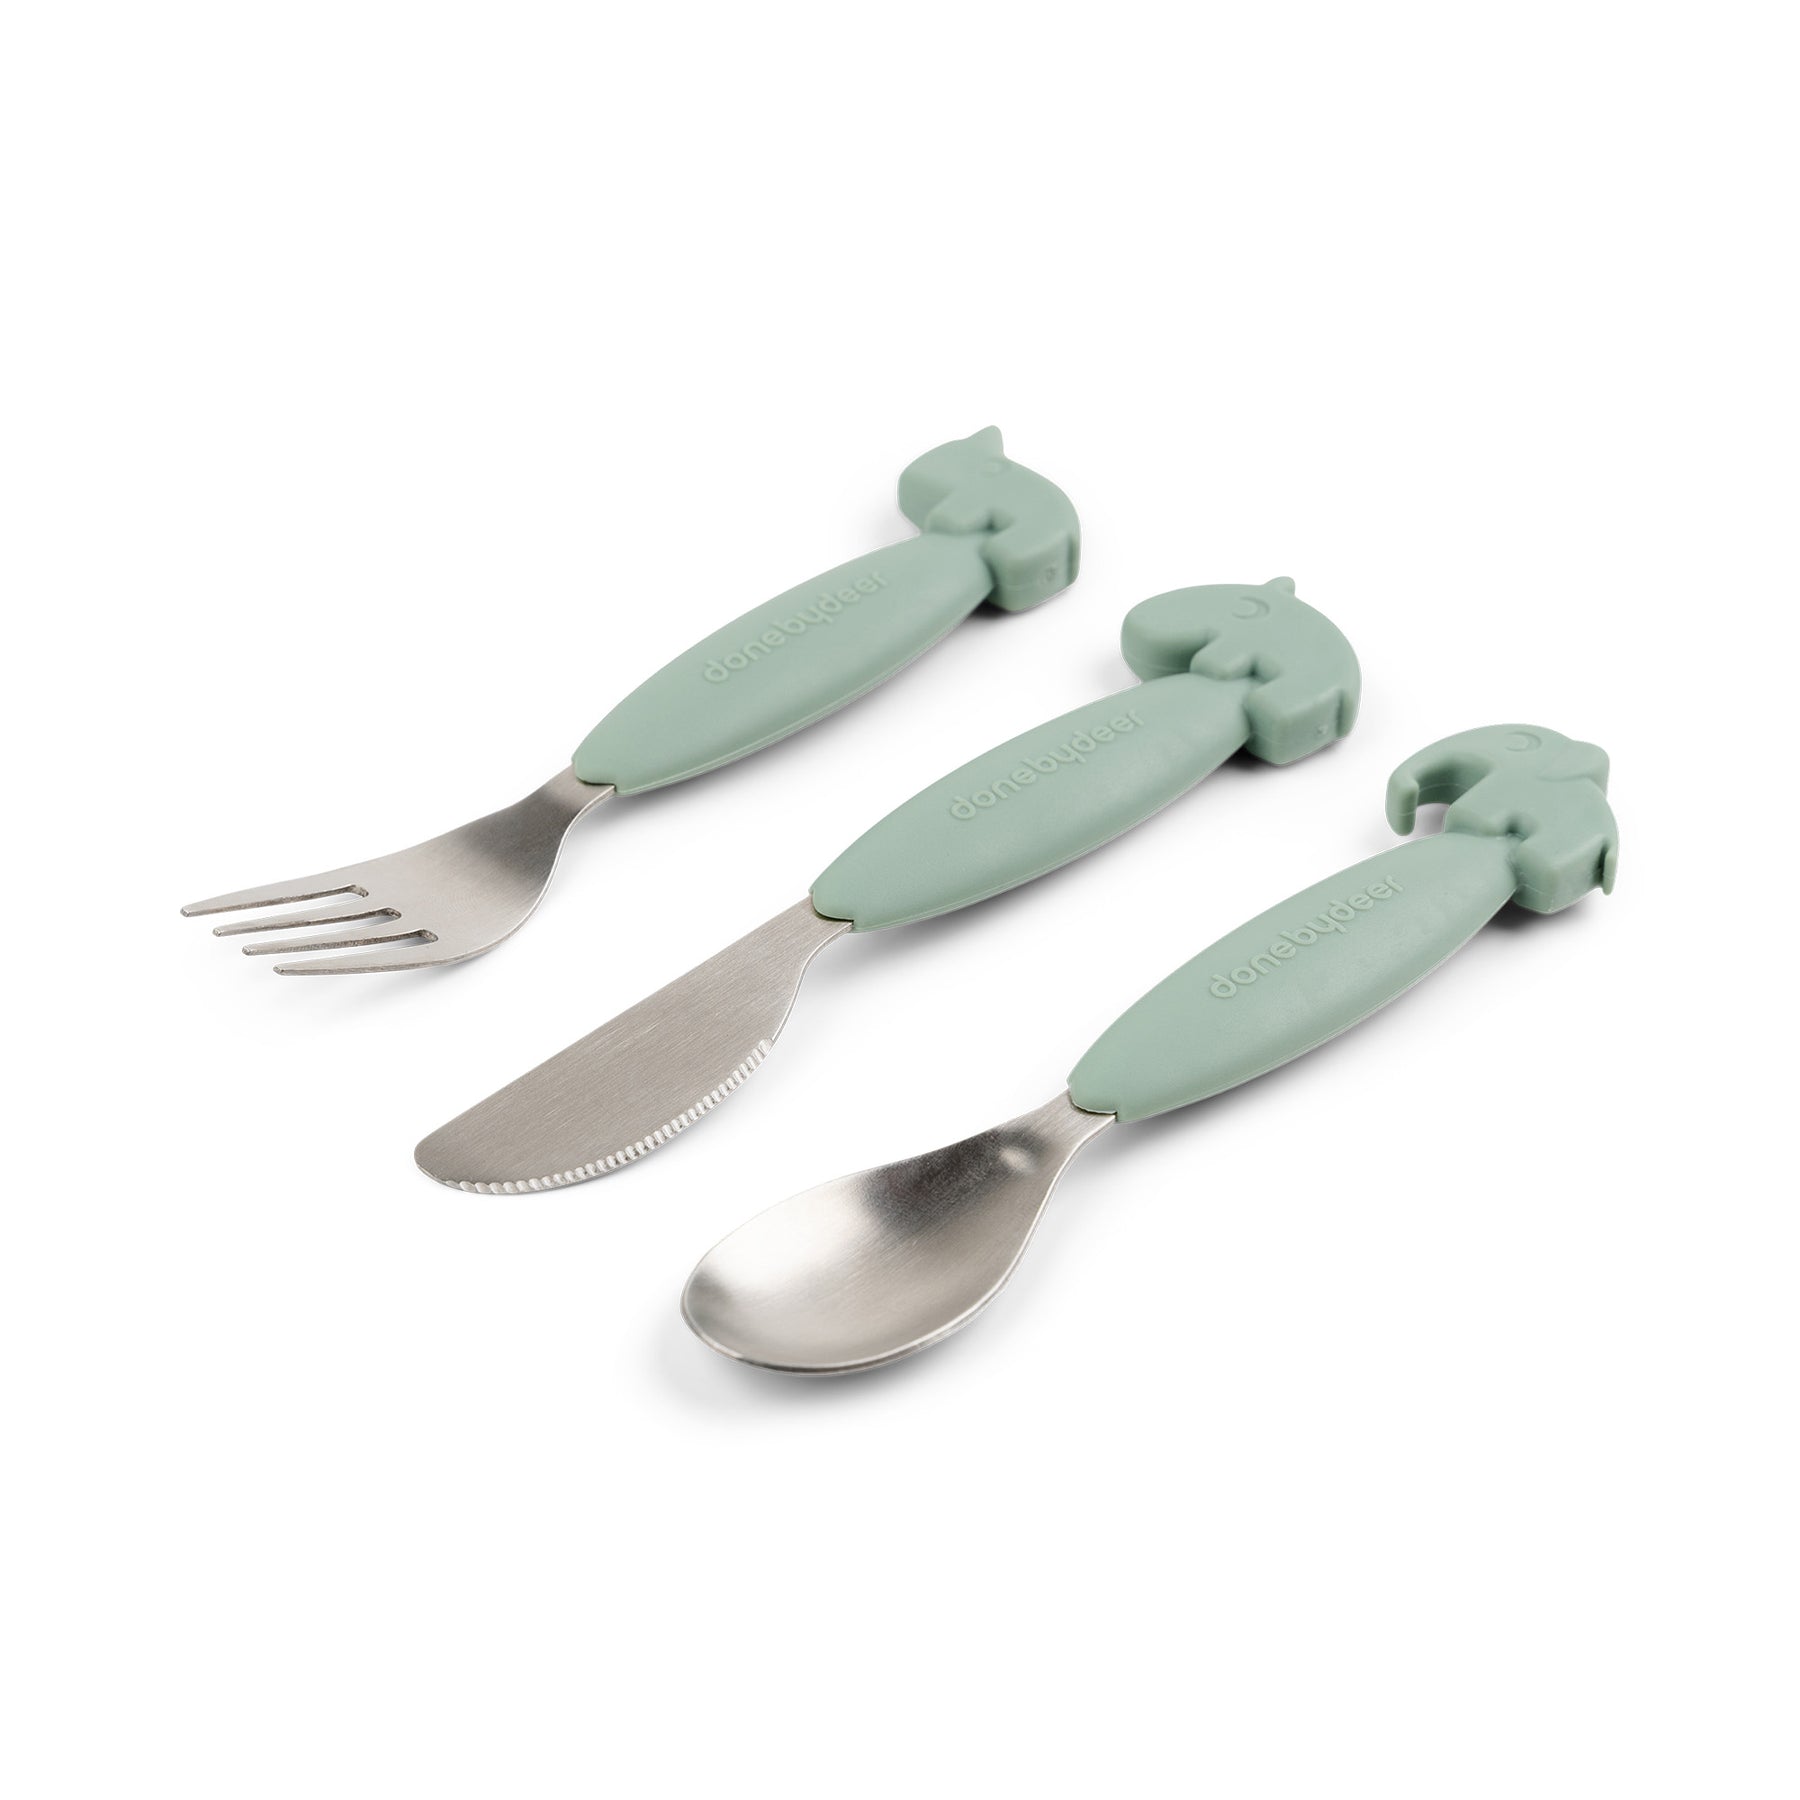 Easy-grip cutlery set - Deer friends - Green - Front